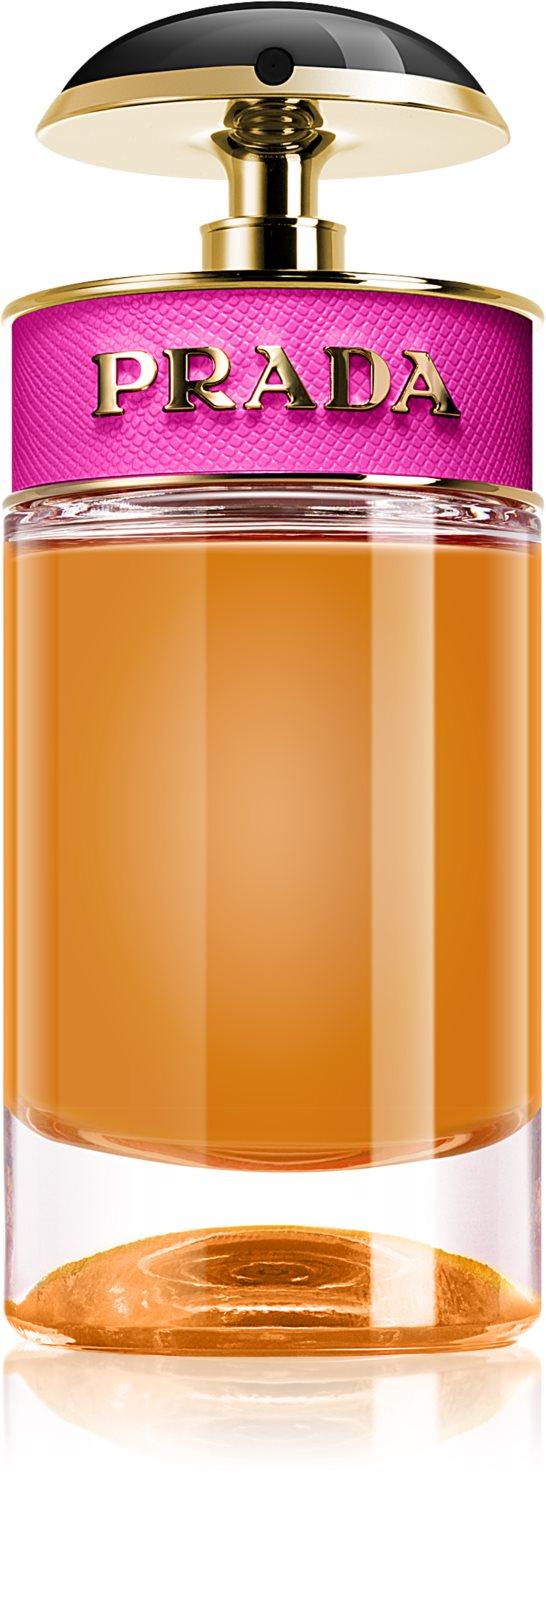 Prada Candy Eau de Parfum for Women - Tester - Perfume Oasis